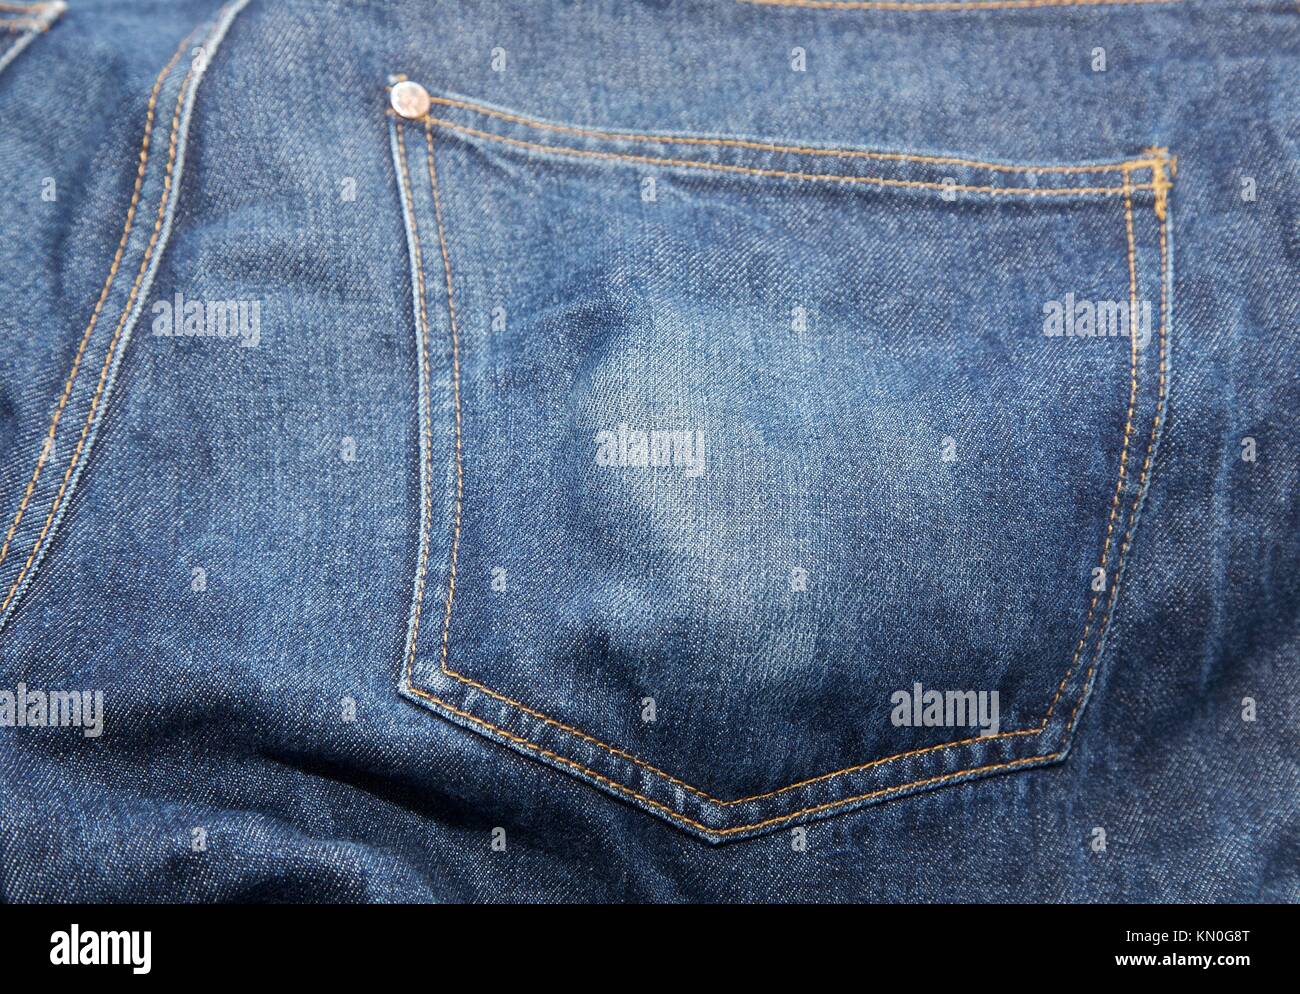 Rear jeans pocket Stock Photo - Alamy